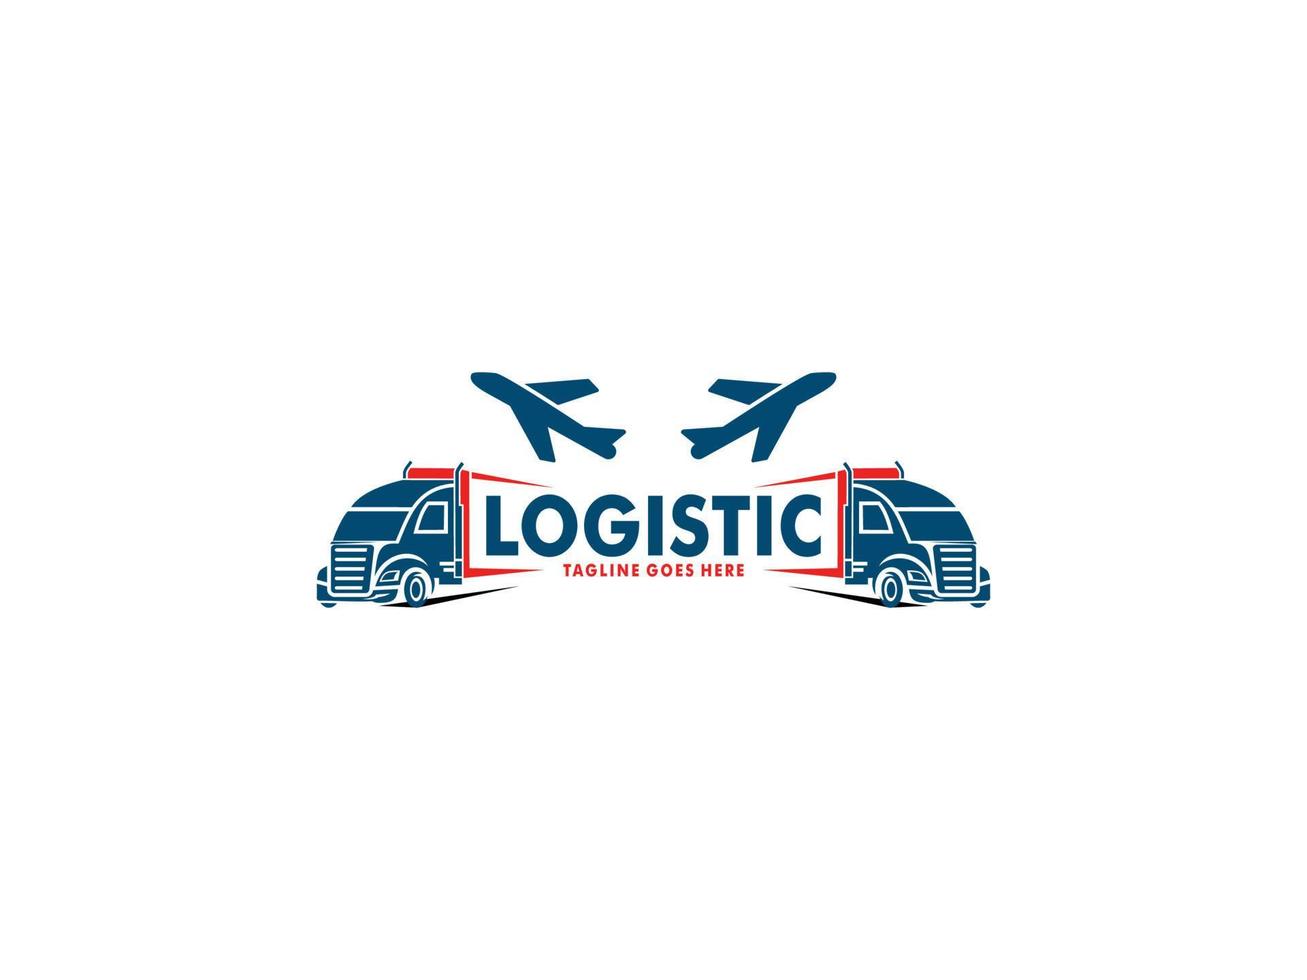 express logistic transportation concept logo design template 21813839 ...